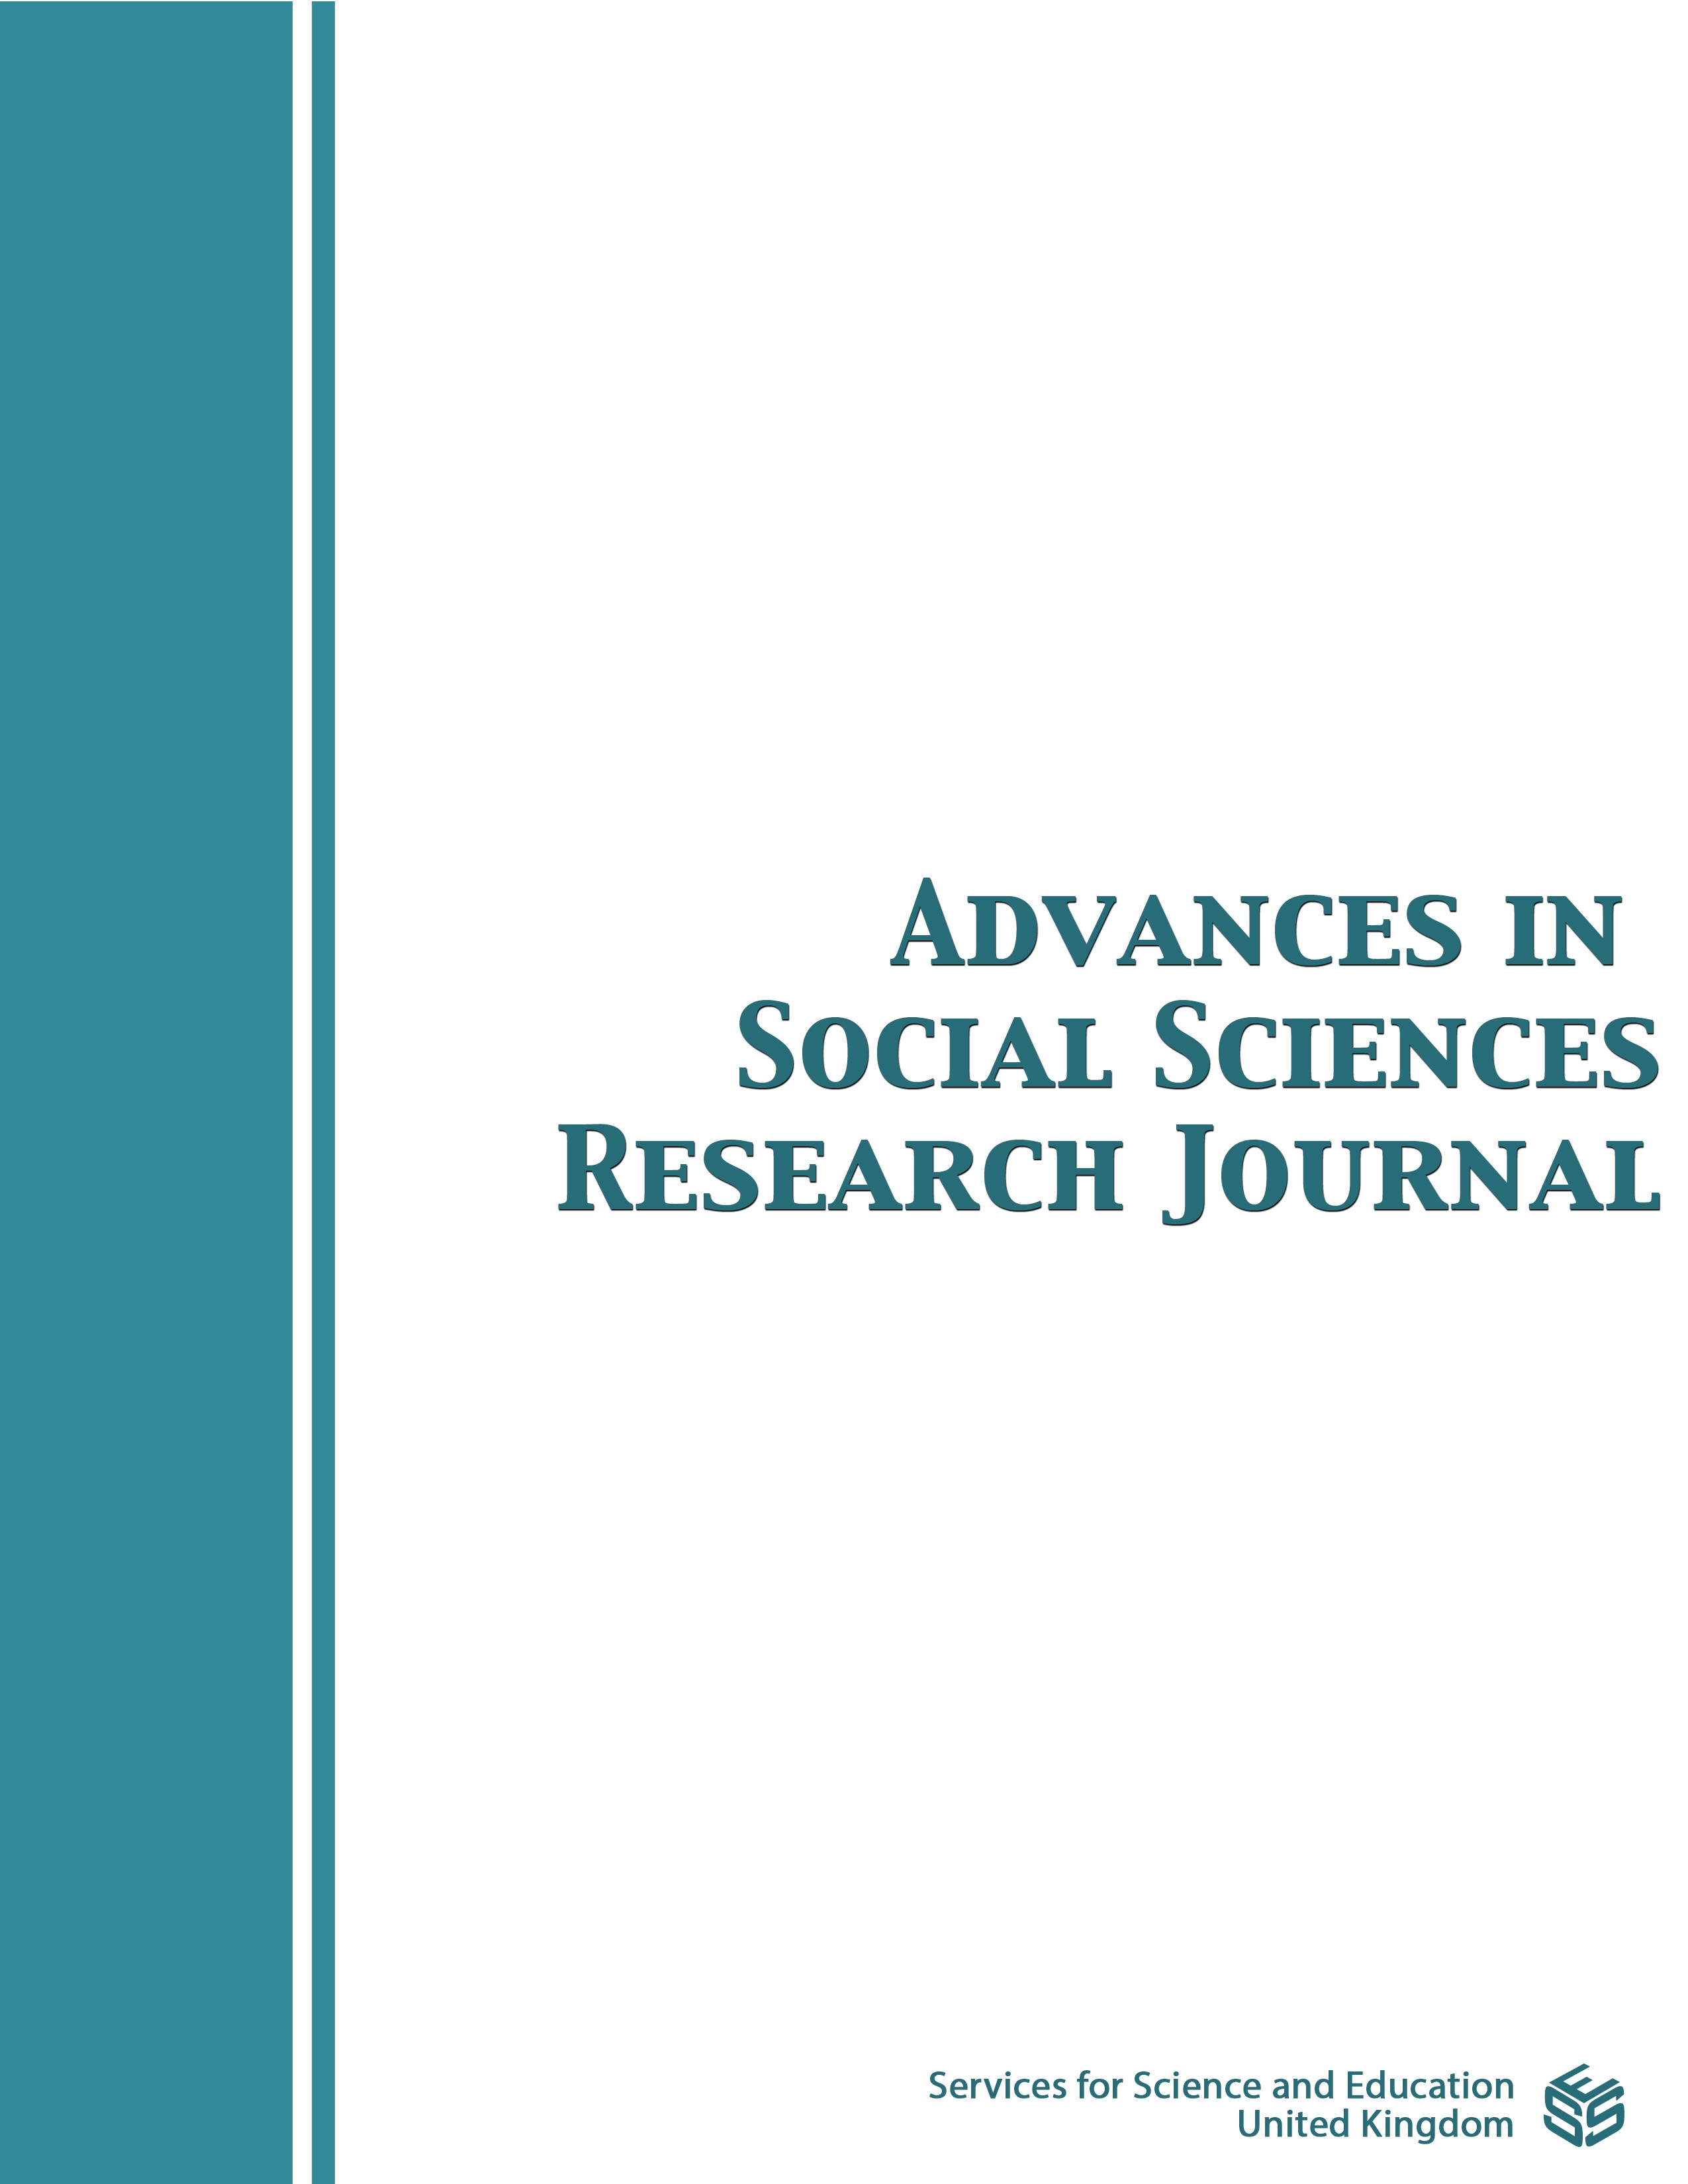 					View Vol. 8 No. 10 (2021): Advances in Social Sciences Research Journal 
				